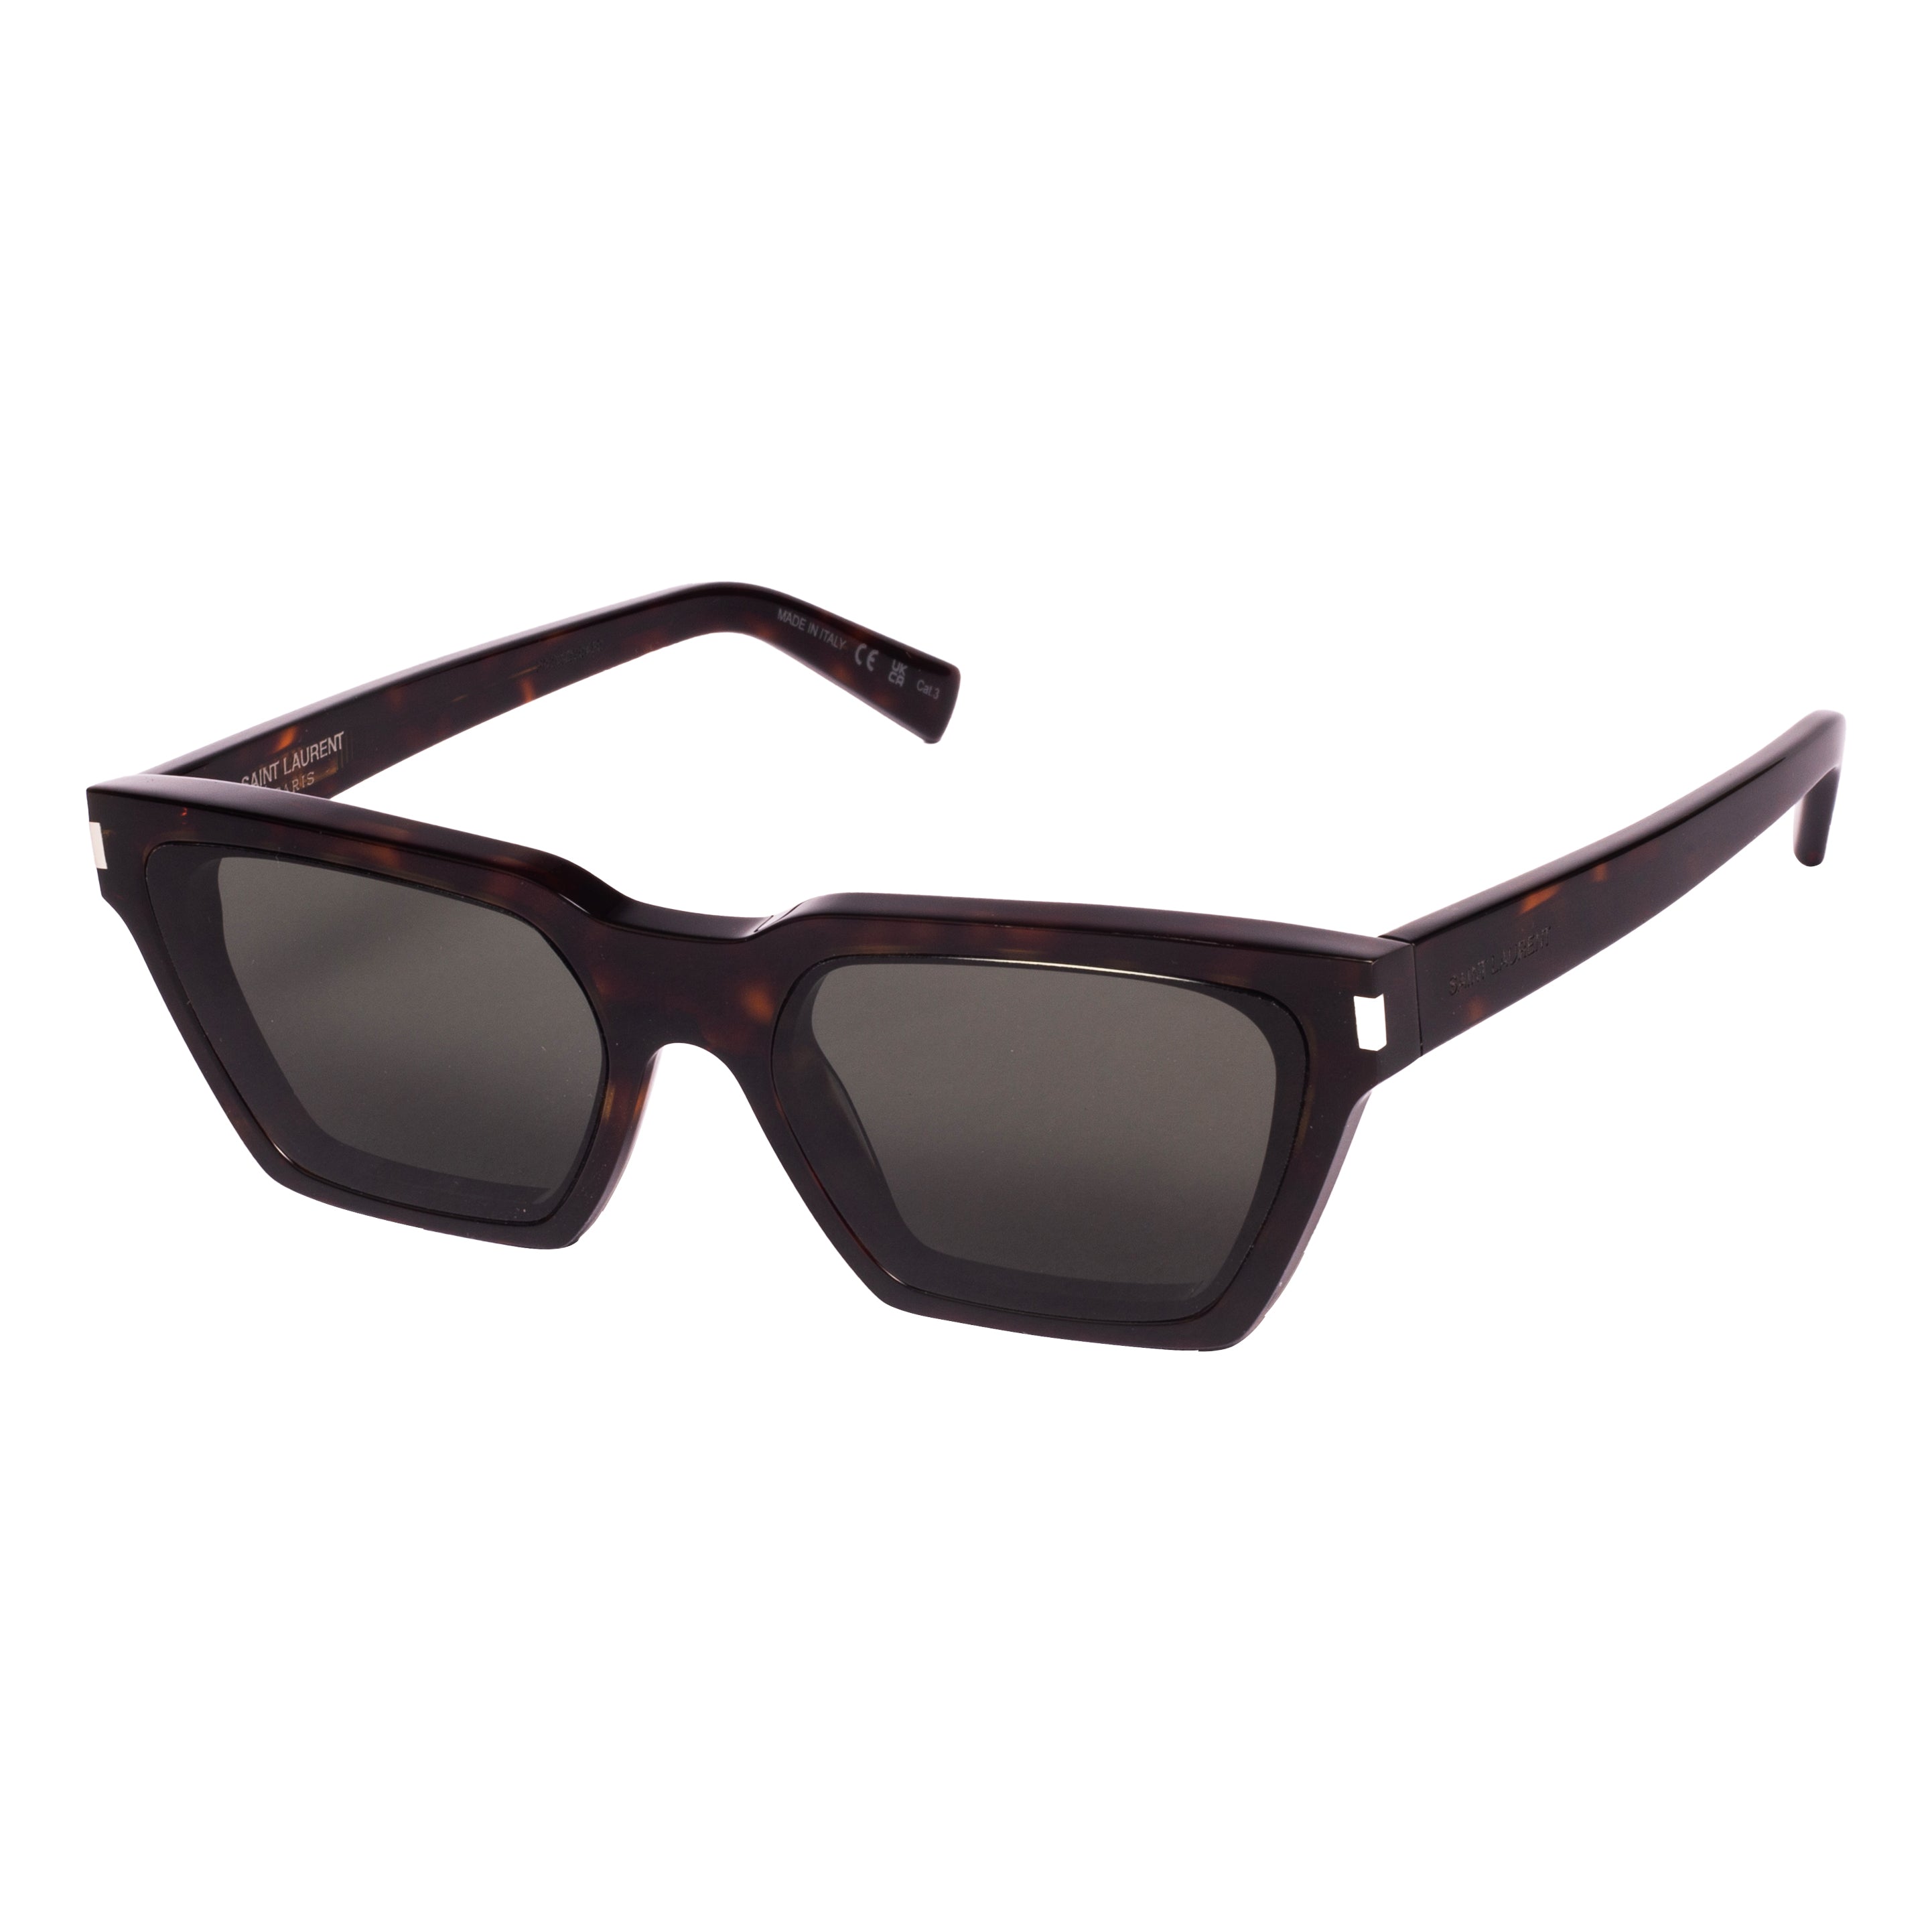 Saint Laurent-SL 633 CALISTA-57- Sunglasses - Premium Sunglasses from Saint Laurent - Just Rs. 26400! Shop now at Laxmi Opticians